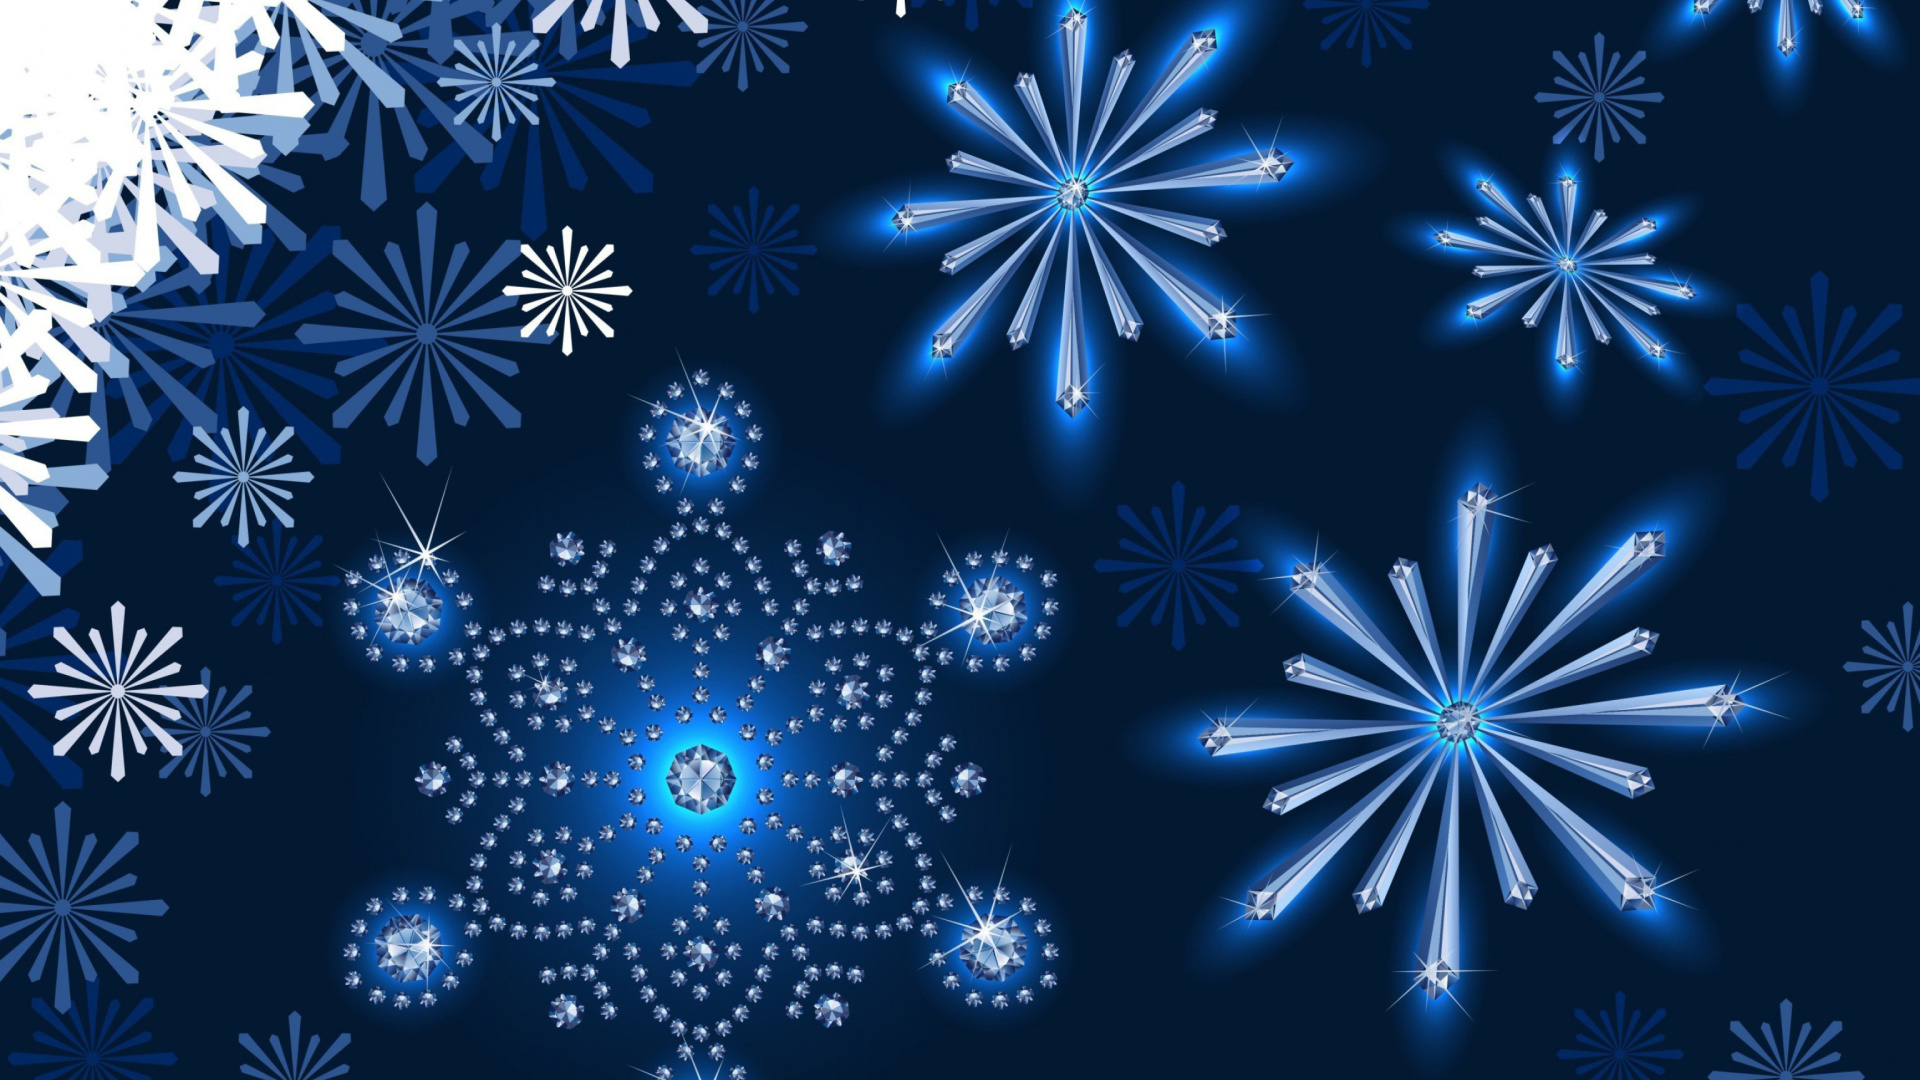 Snowflakes Ornament wallpaper 1920x1080